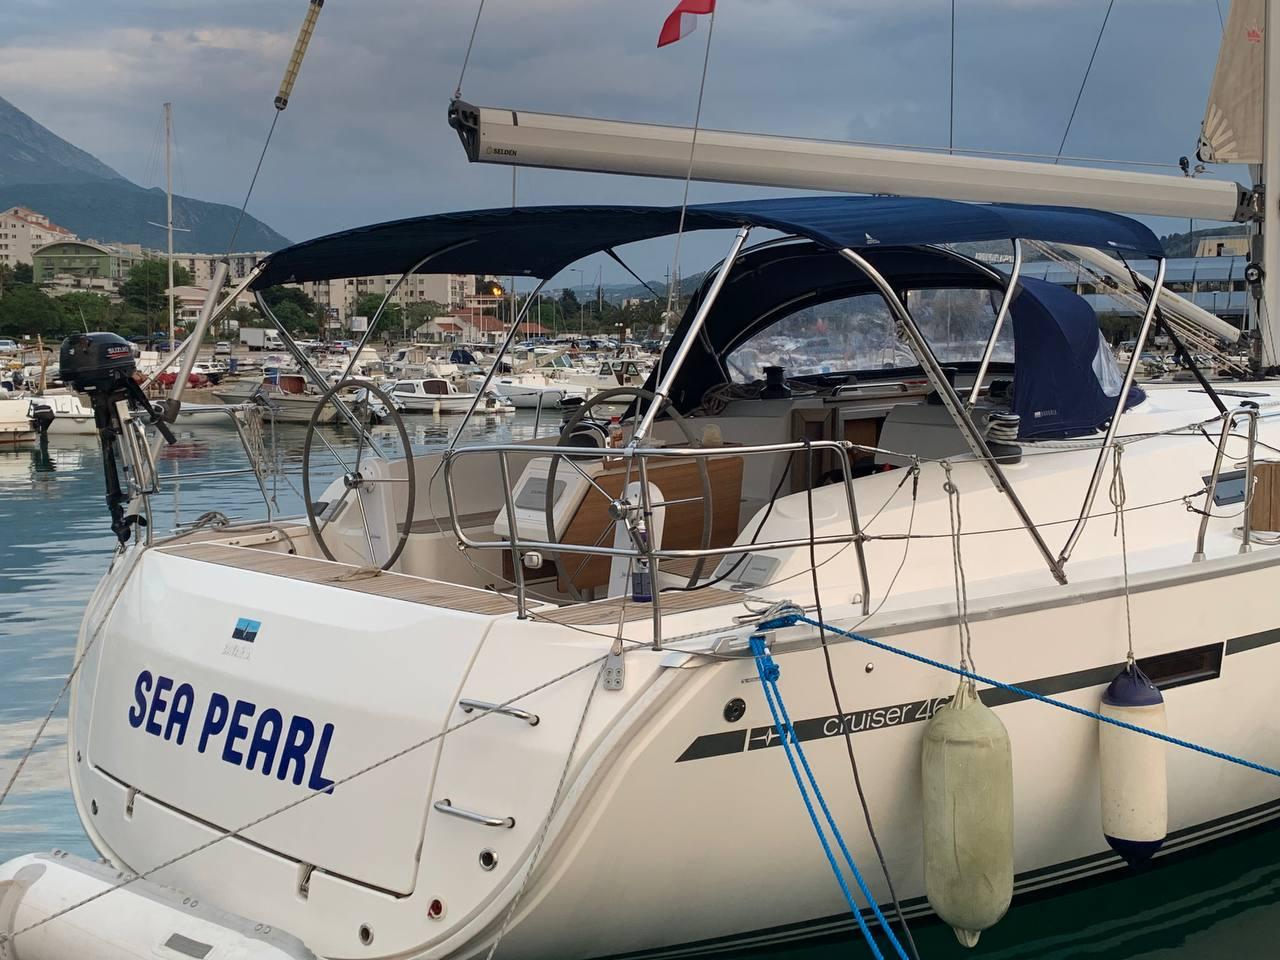 Sea Pearl Yacht Photos Pics 